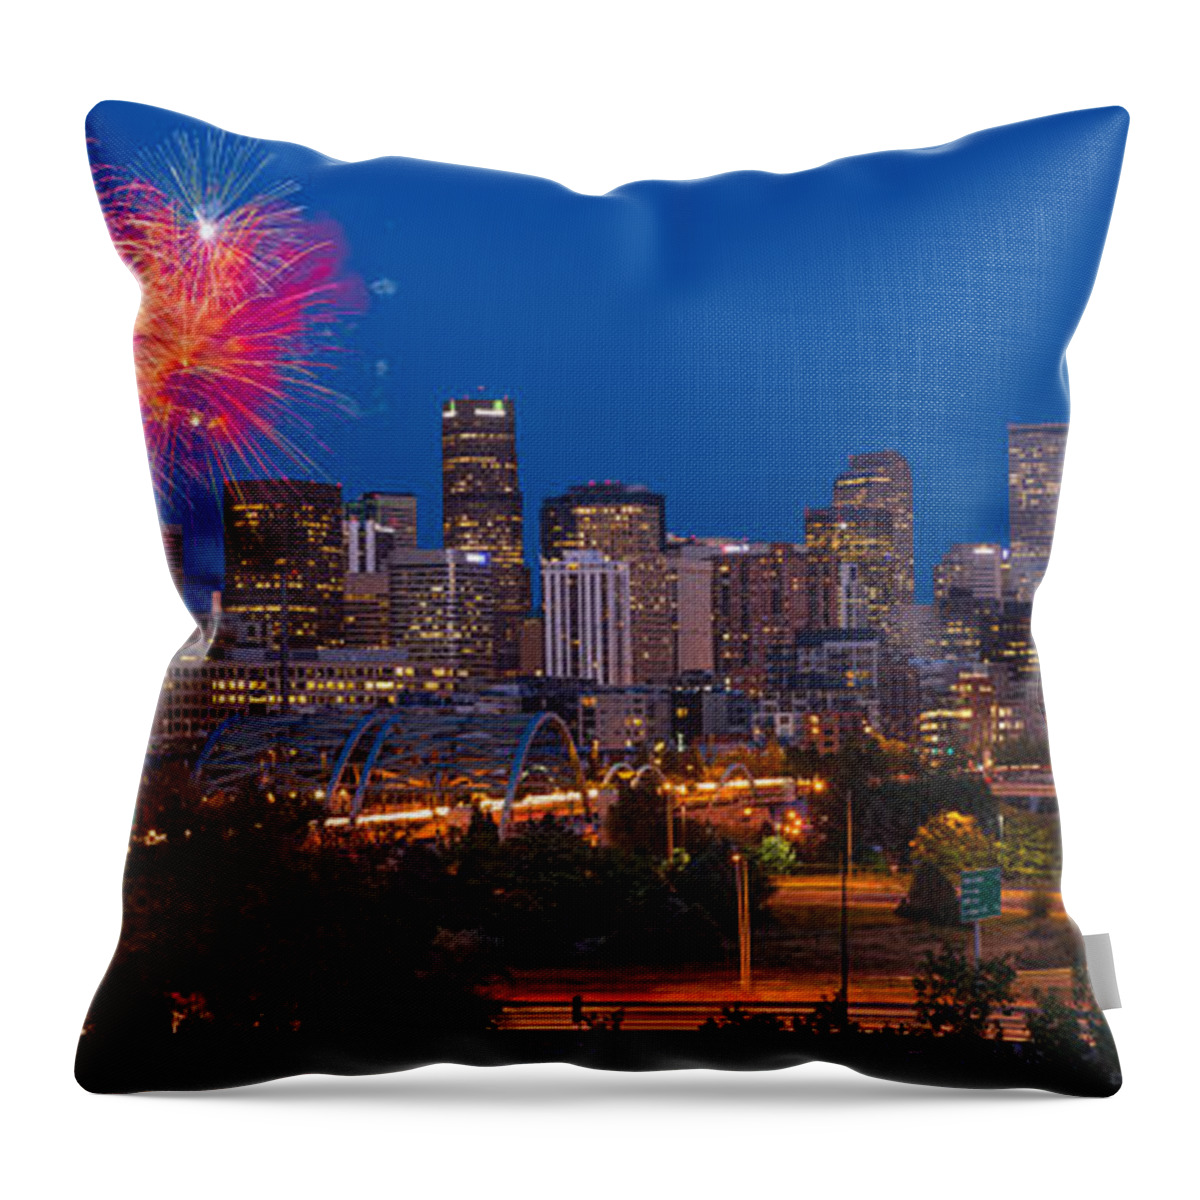 Denver Throw Pillow featuring the photograph Denver Skyline Fireworks by Steve Gadomski